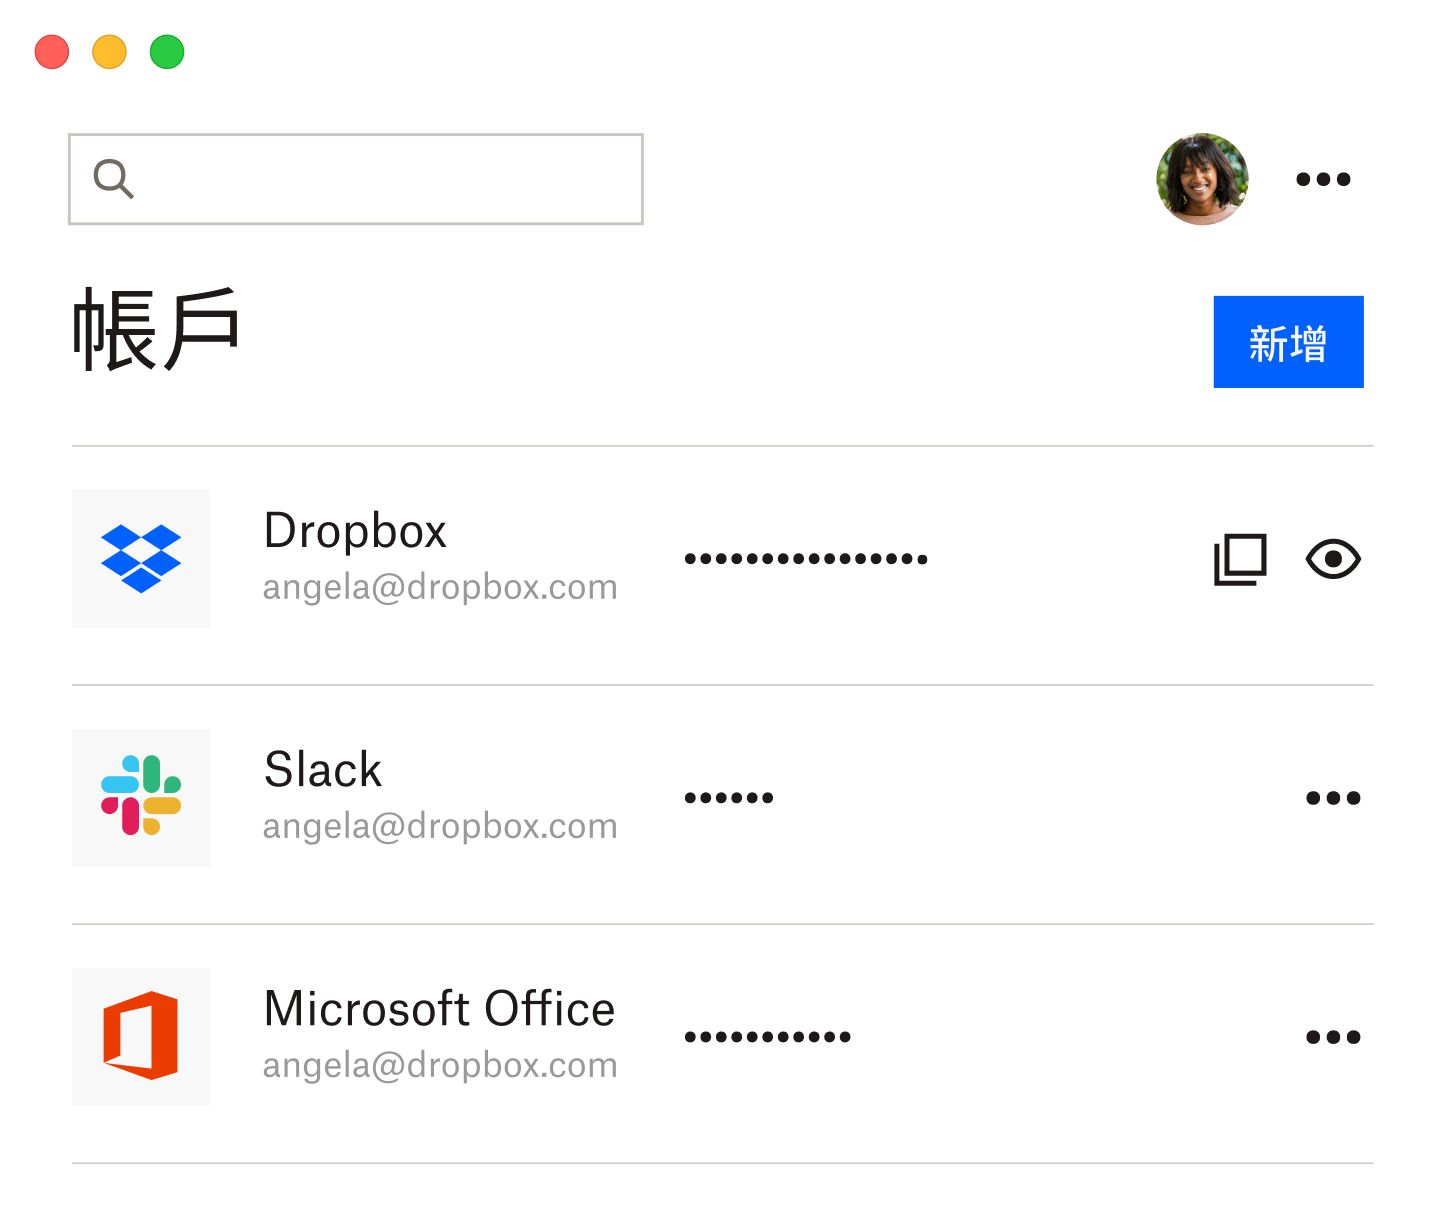 Dropbox 密碼管理工具，以及內含 Dropbox、Slack 及 Microsoft Office 已儲存密碼的清單